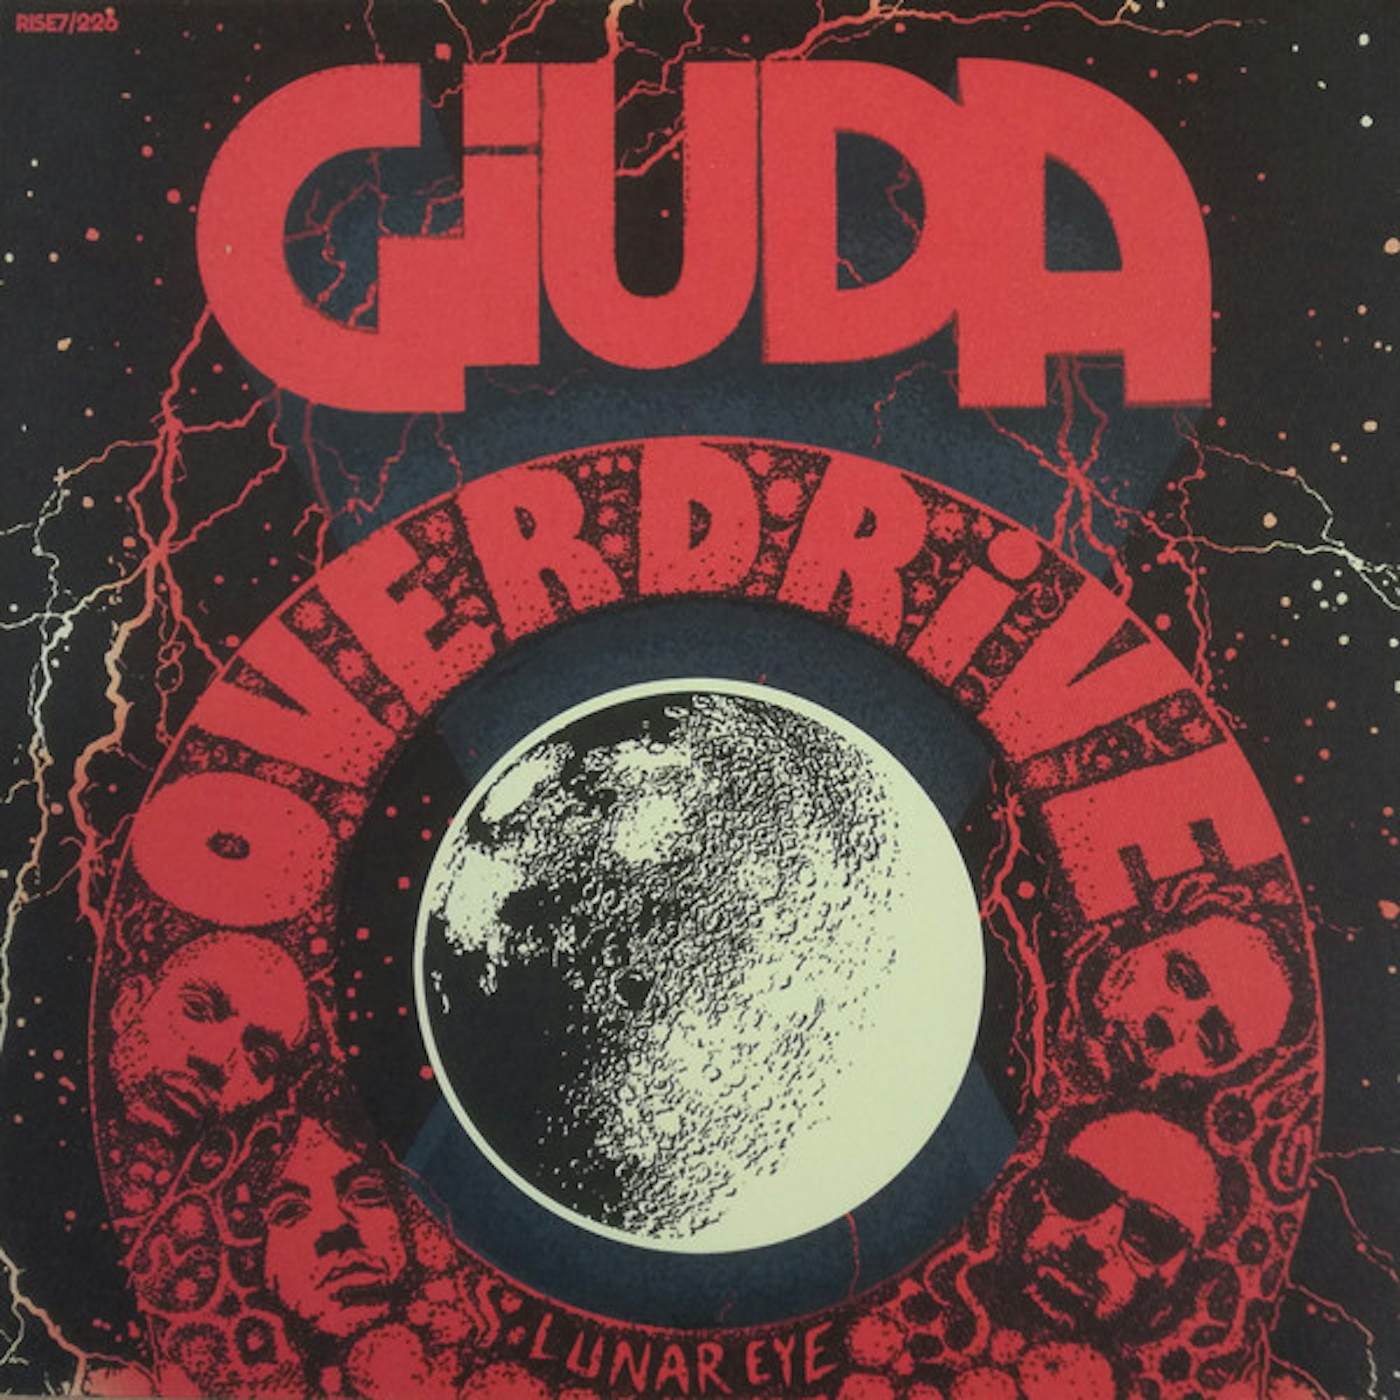 Giuda OVERDRIVE Vinyl Record